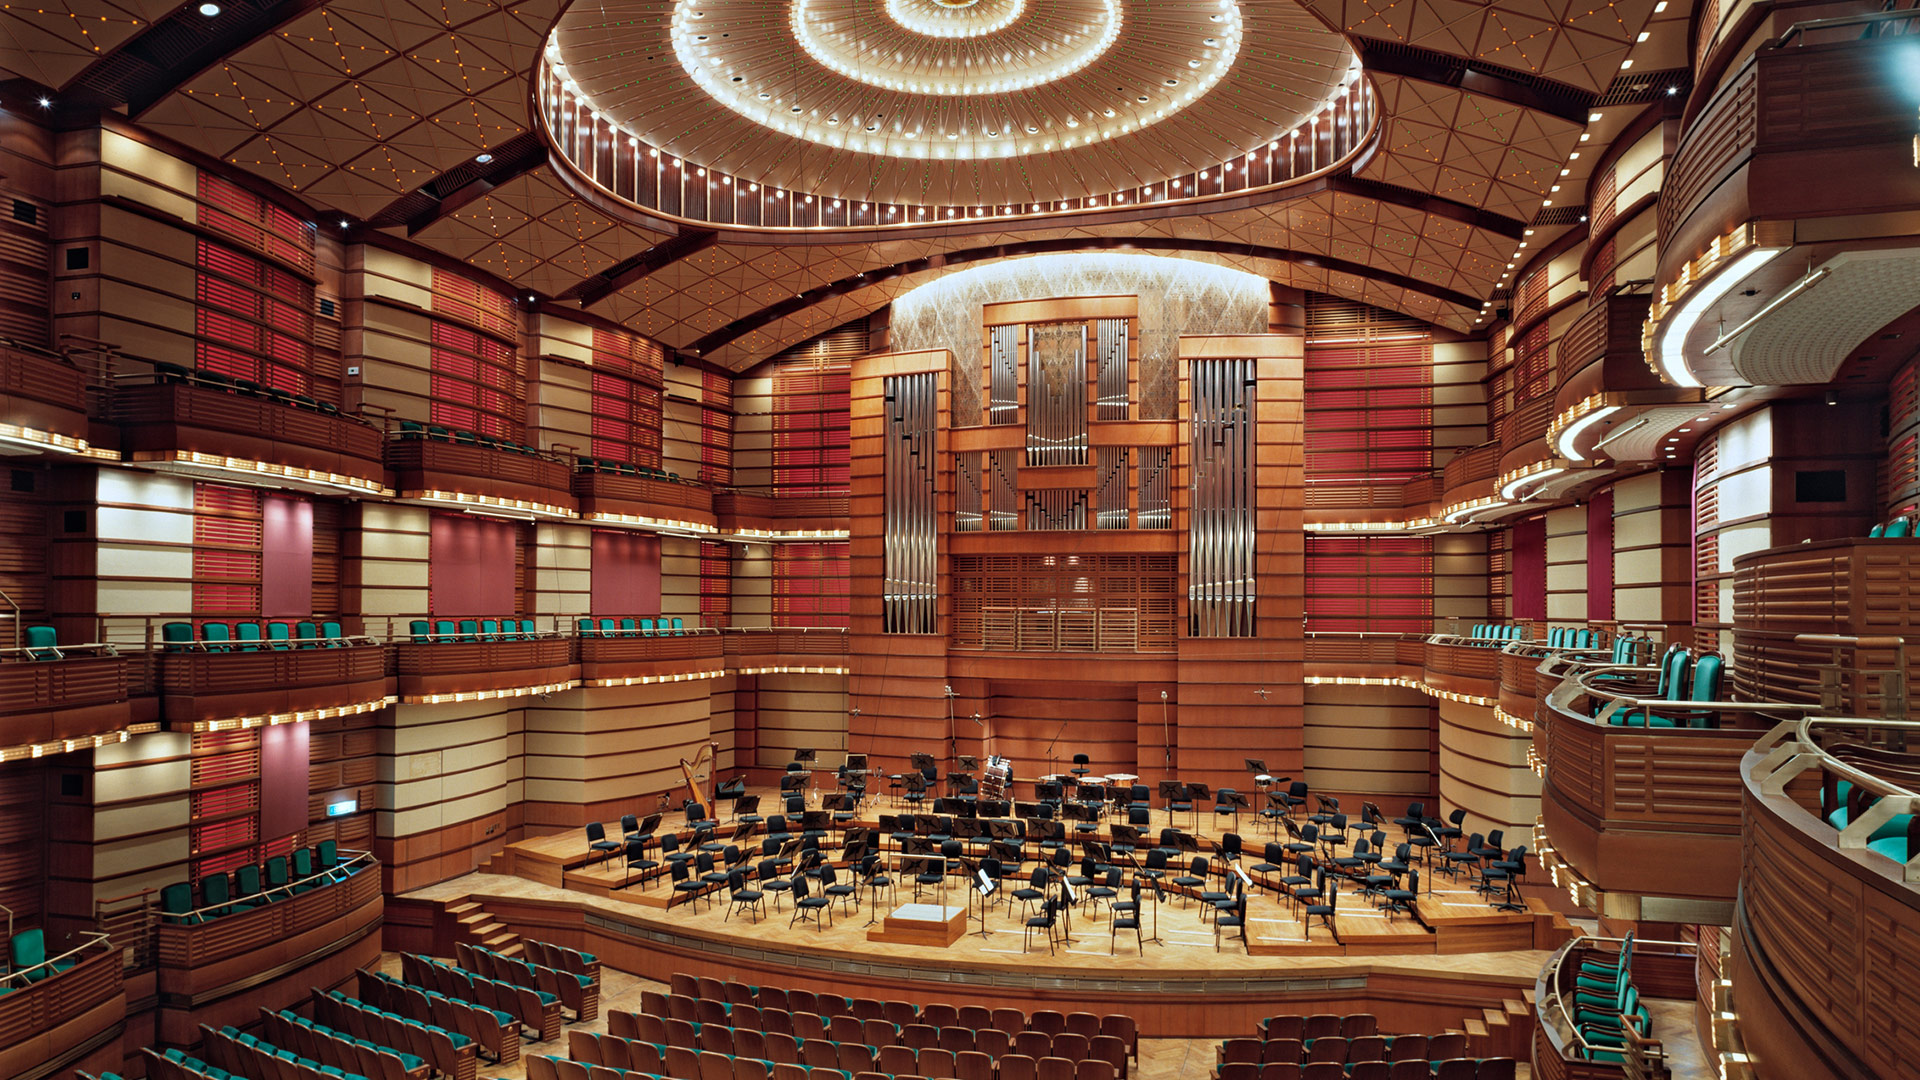 Dewan Filharmonik Petronas Concert Hall